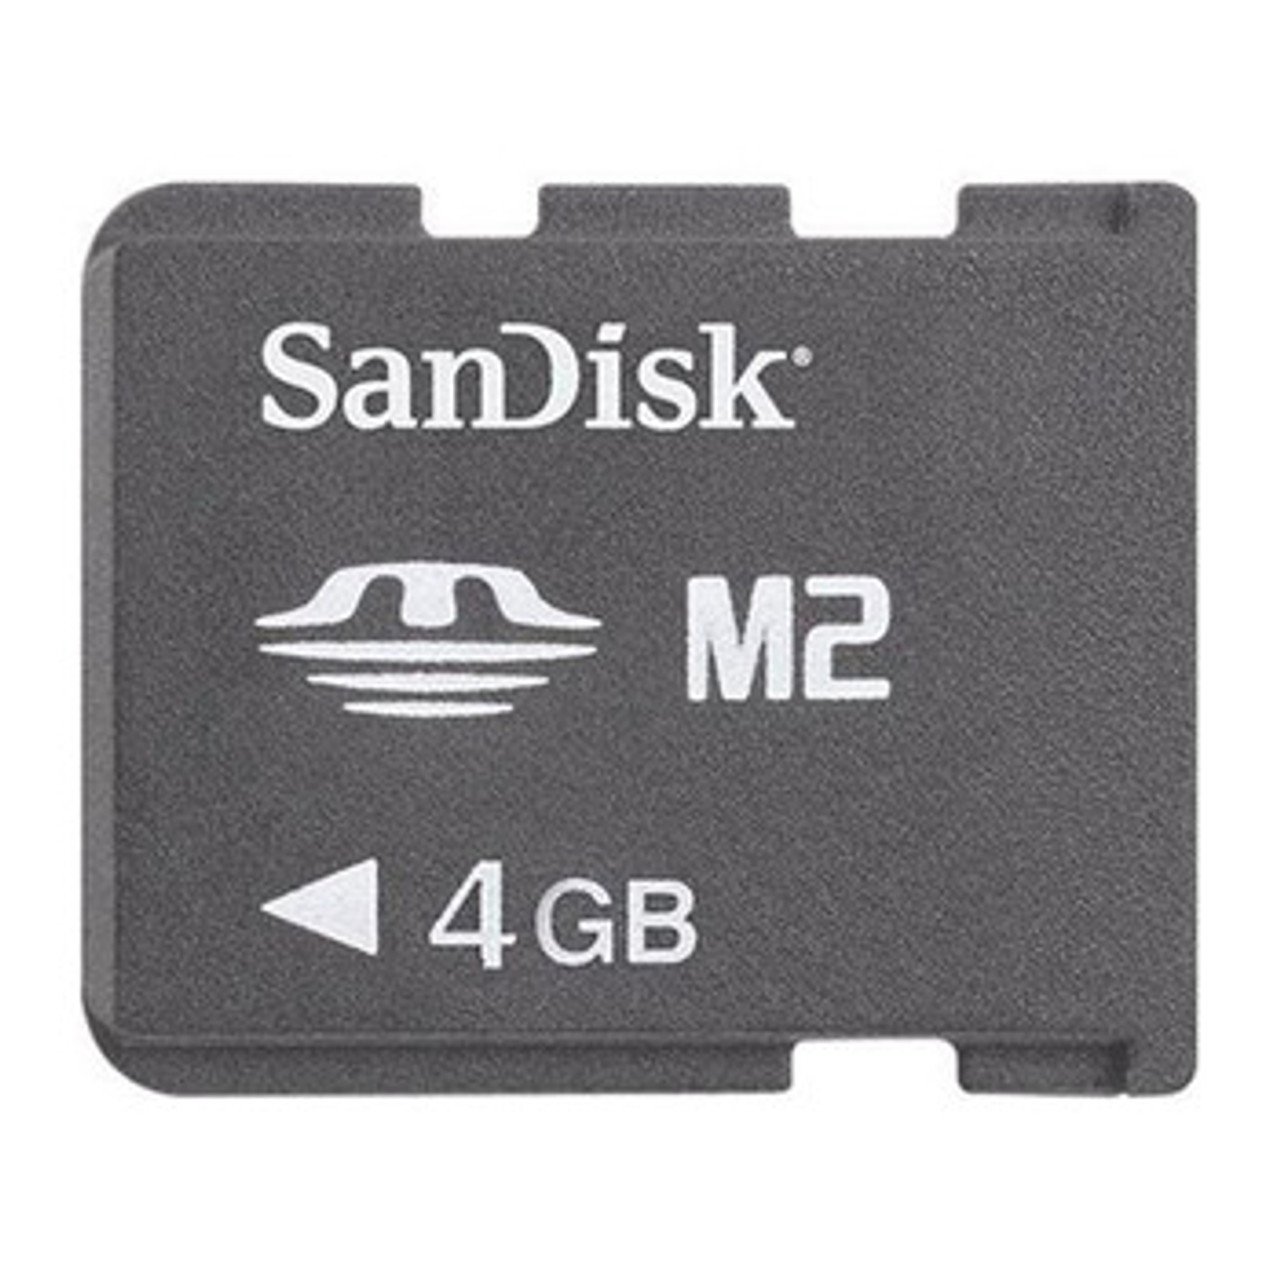 SDMSM2-004G-E11M | Sandisk | Micro M2 4Gb Memory Card